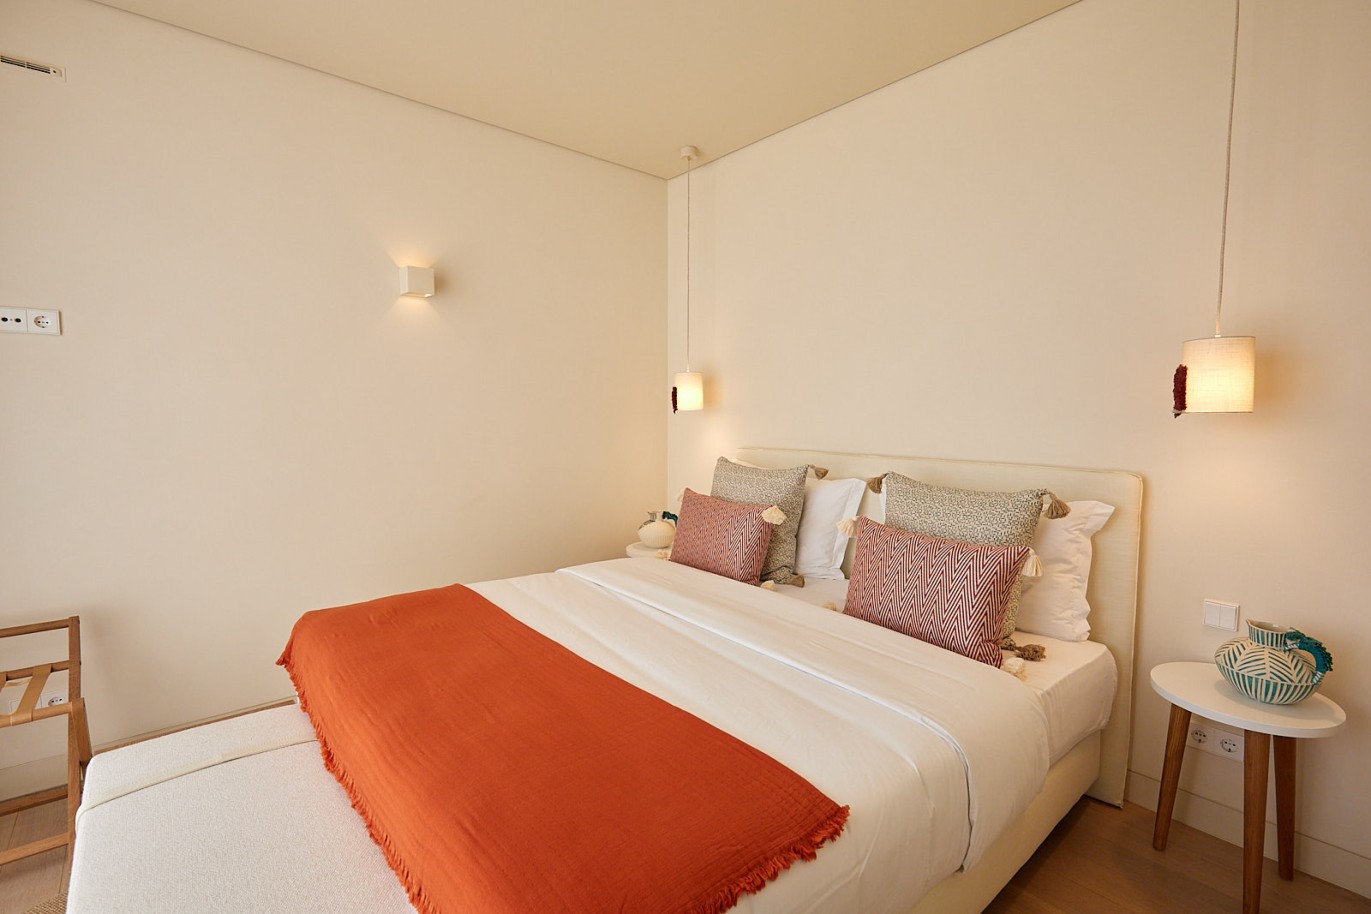 2 bedroom apartment in resort, for sale in Porches, Algarve_230639